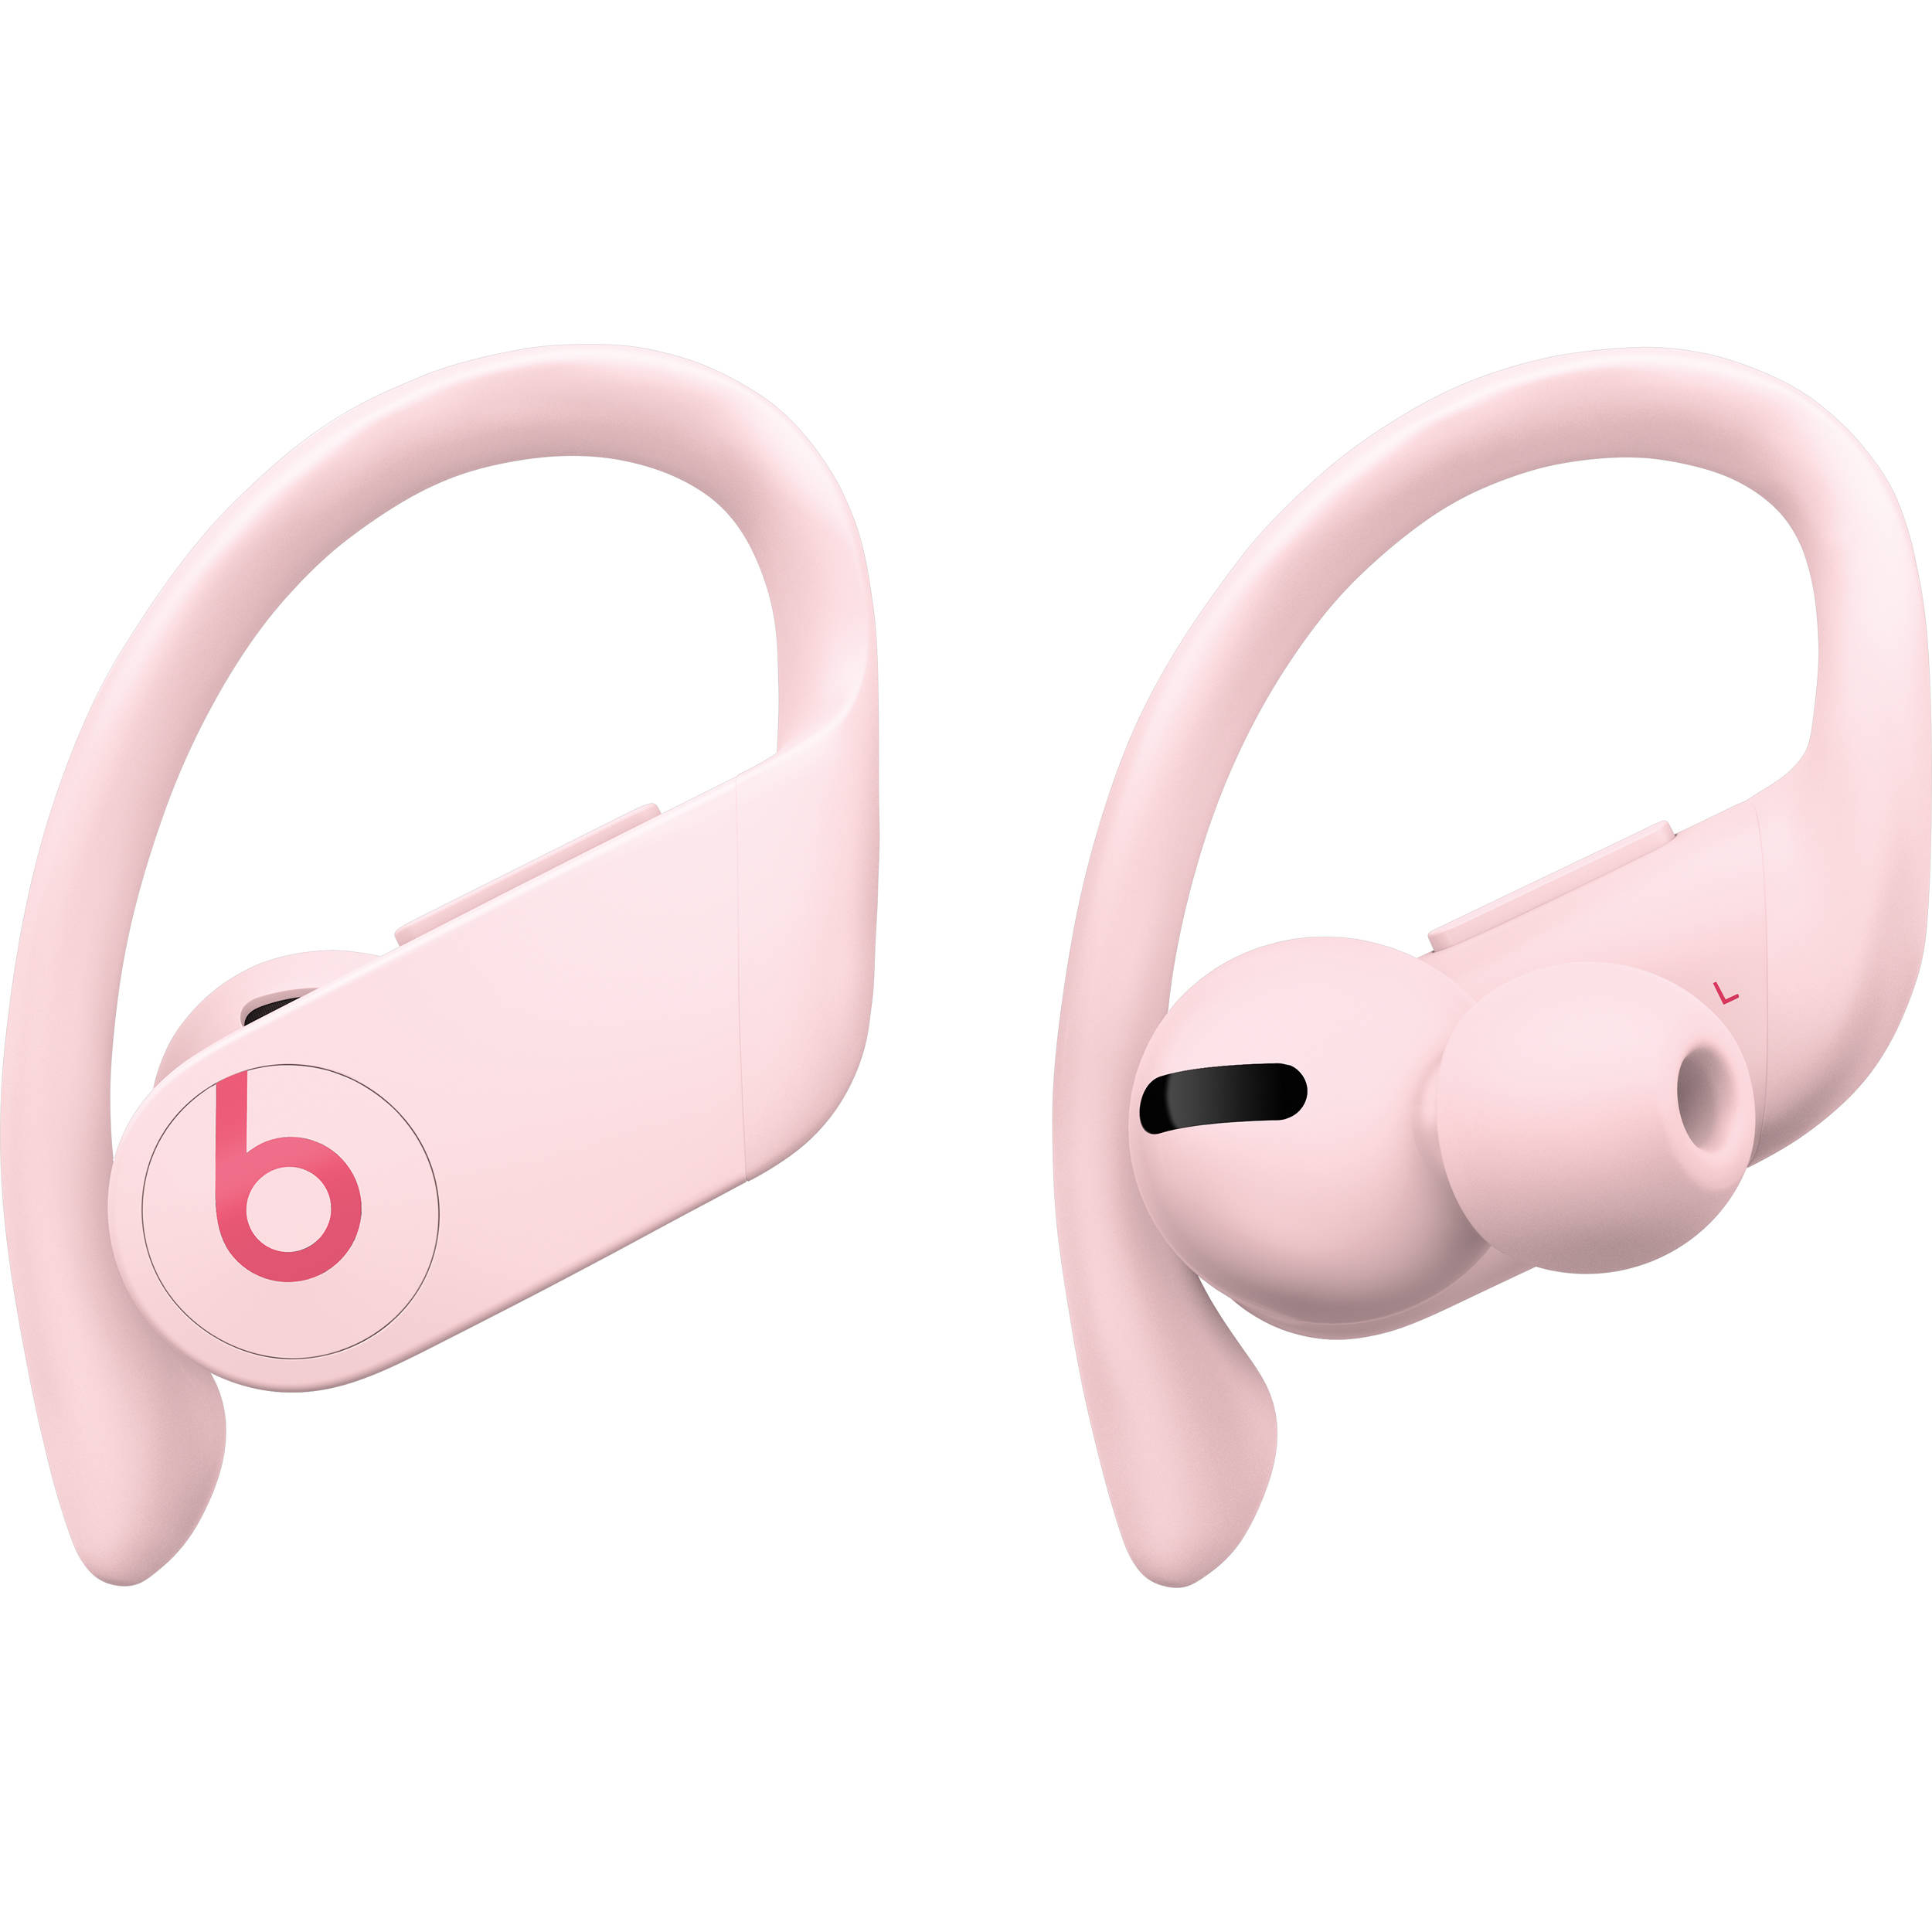 pink and grey beats wireless headphones